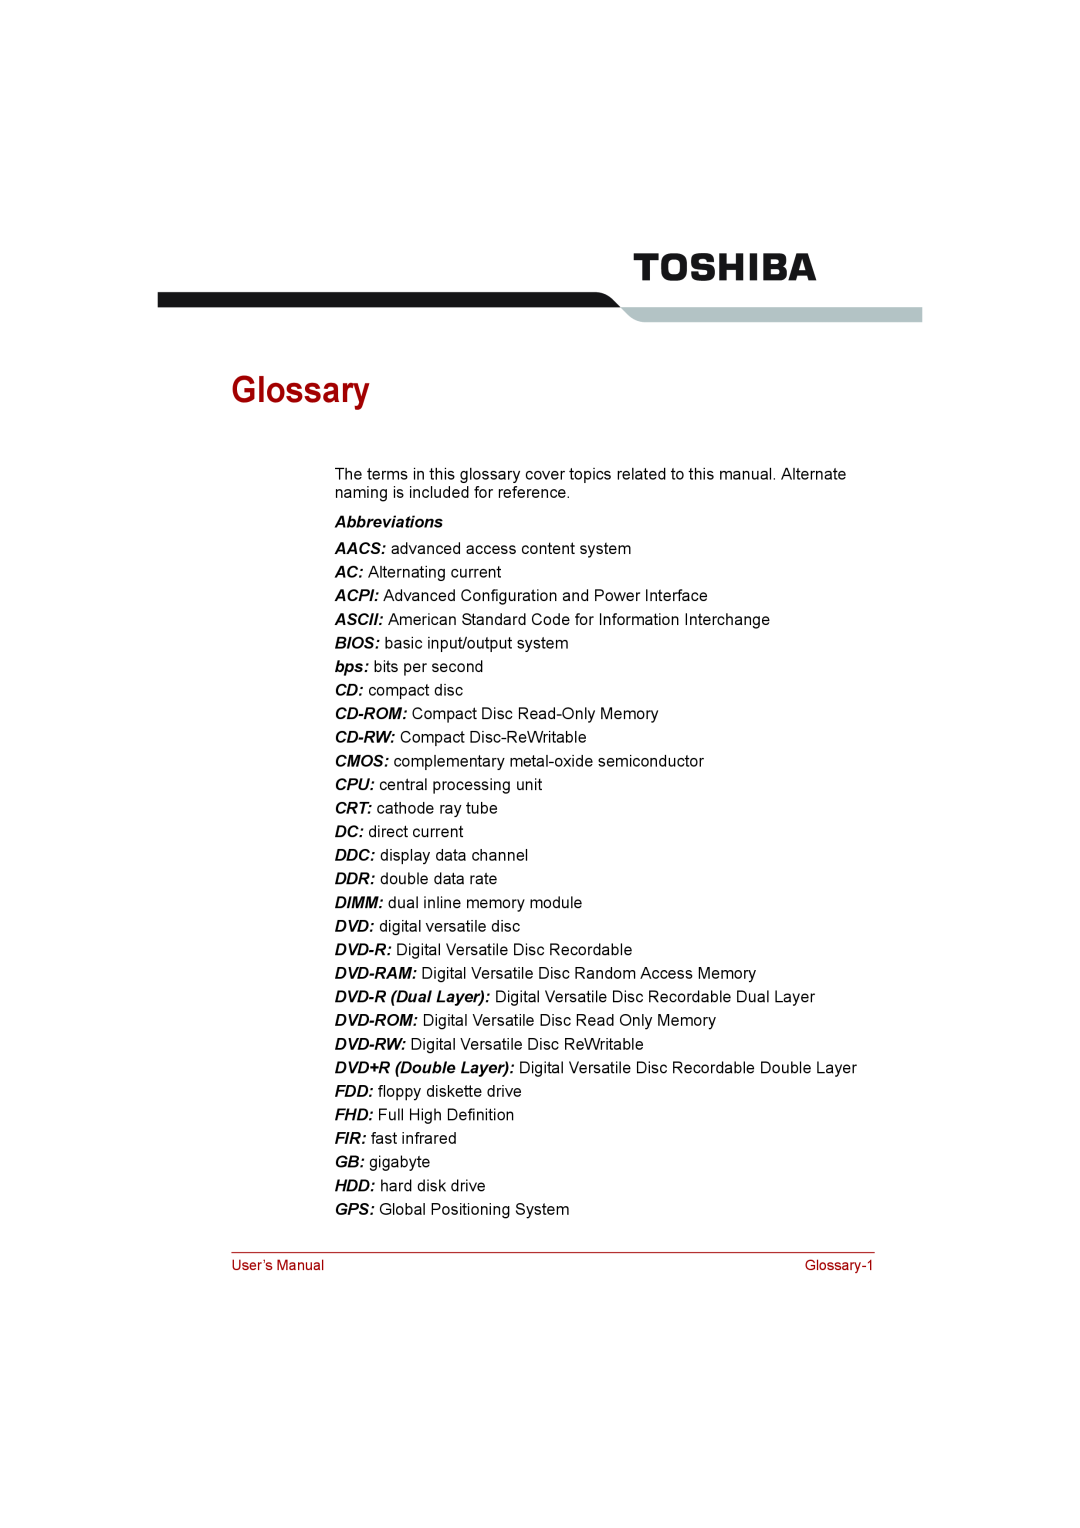 Toshiba toshiba satellite l550/ satellite pro l550/ satellite l550d/ satellite pro l550d series Glossary, Abbreviations 